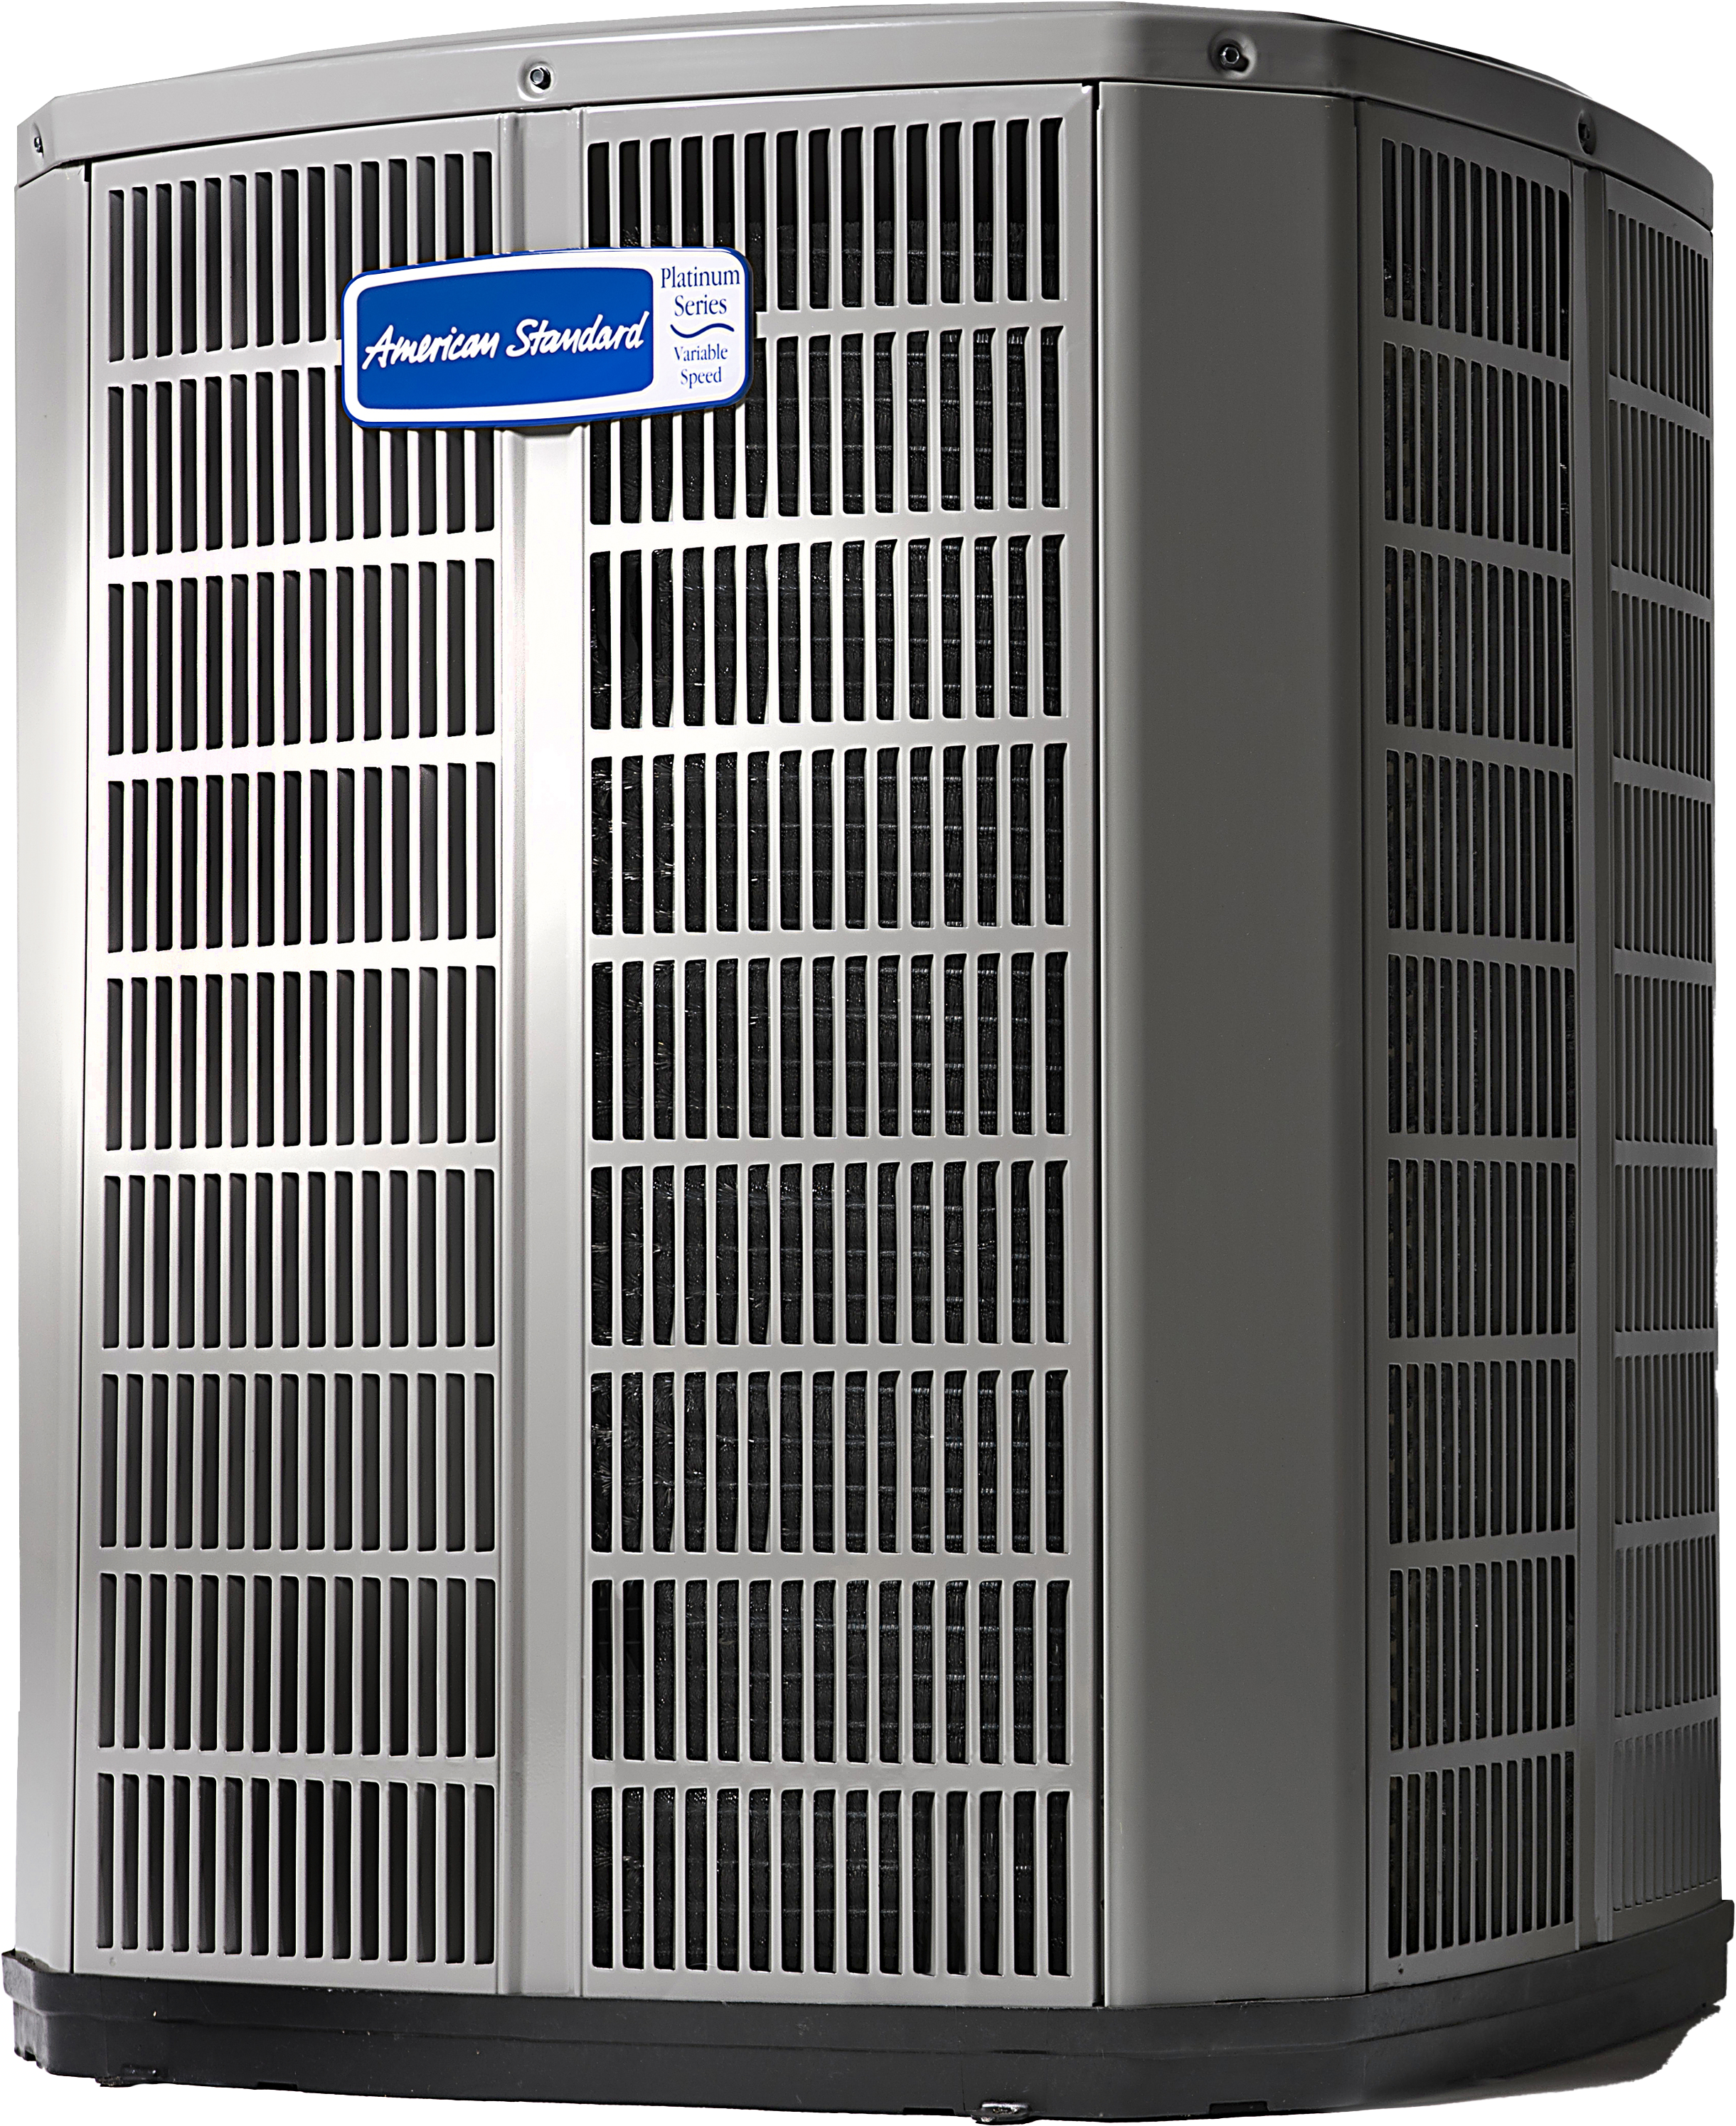 Air conditioner installation services in Williamsburg VA